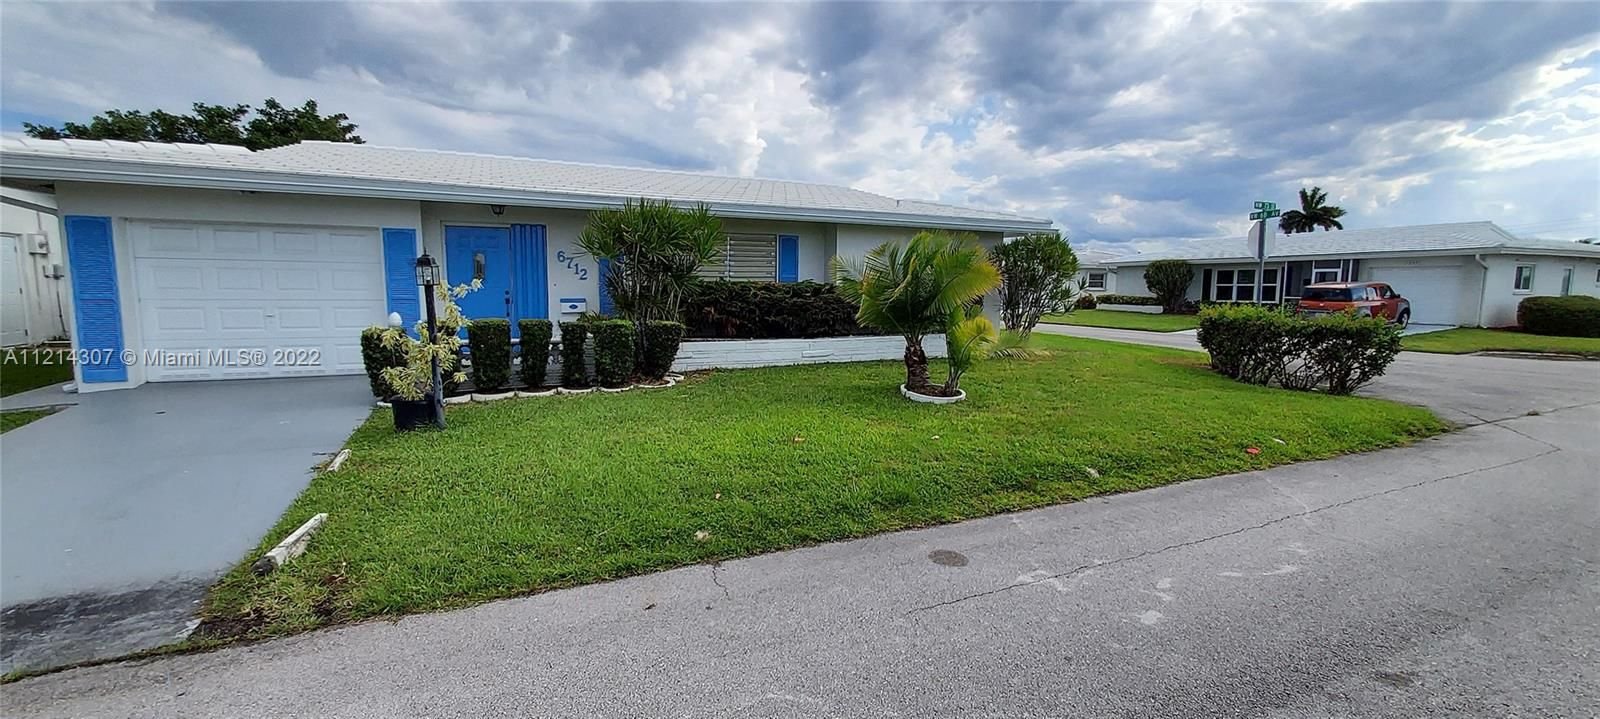 Real estate property located at 6712 73rd St, Broward County, Tamarac, FL